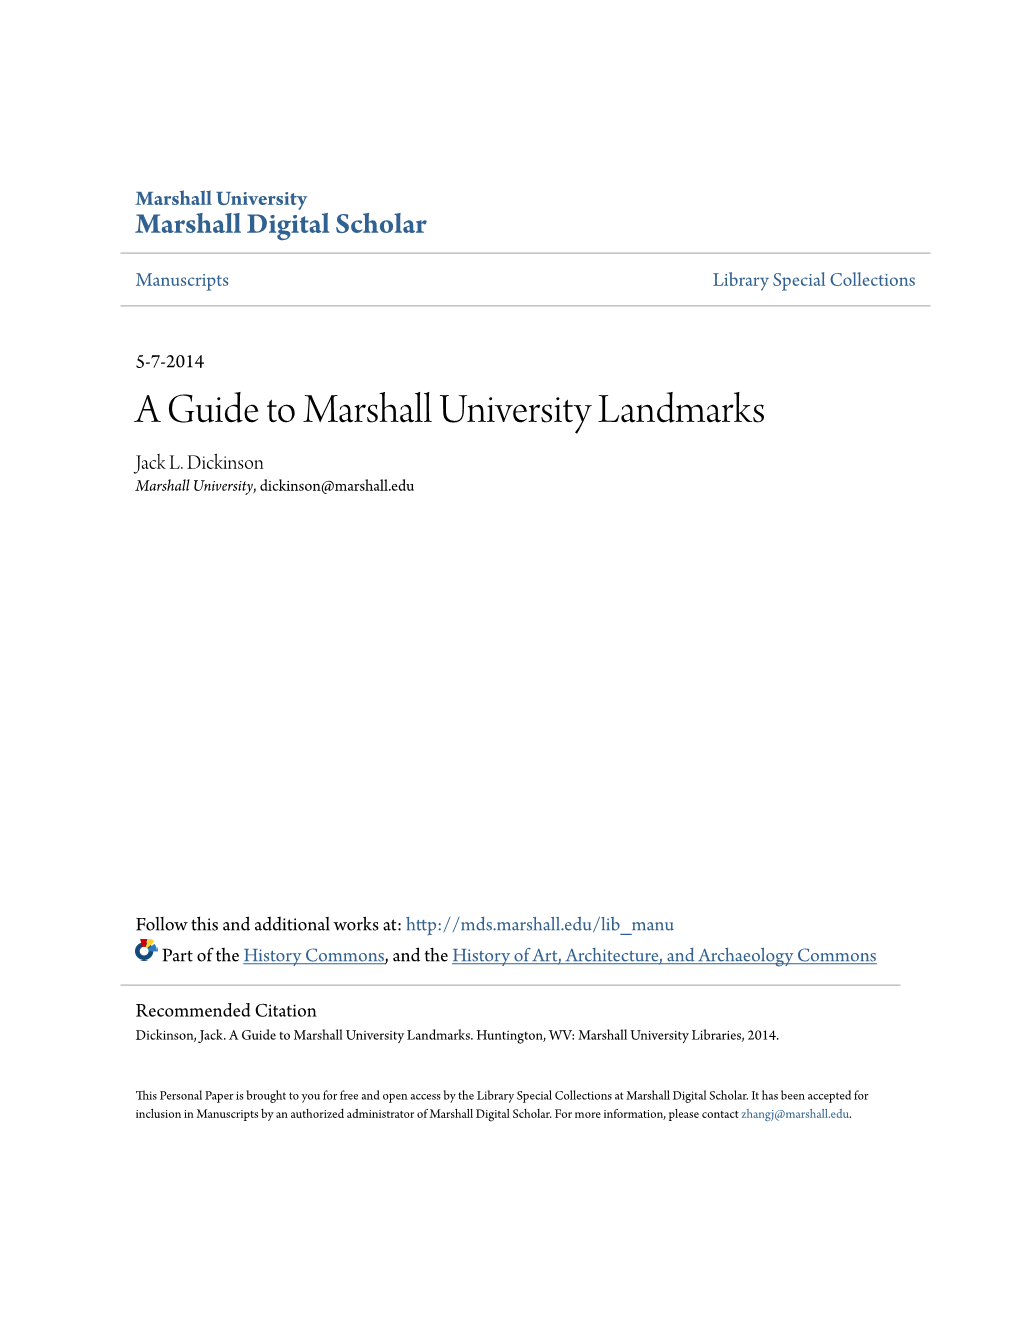 A Guide to Marshall University Landmarks Jack L